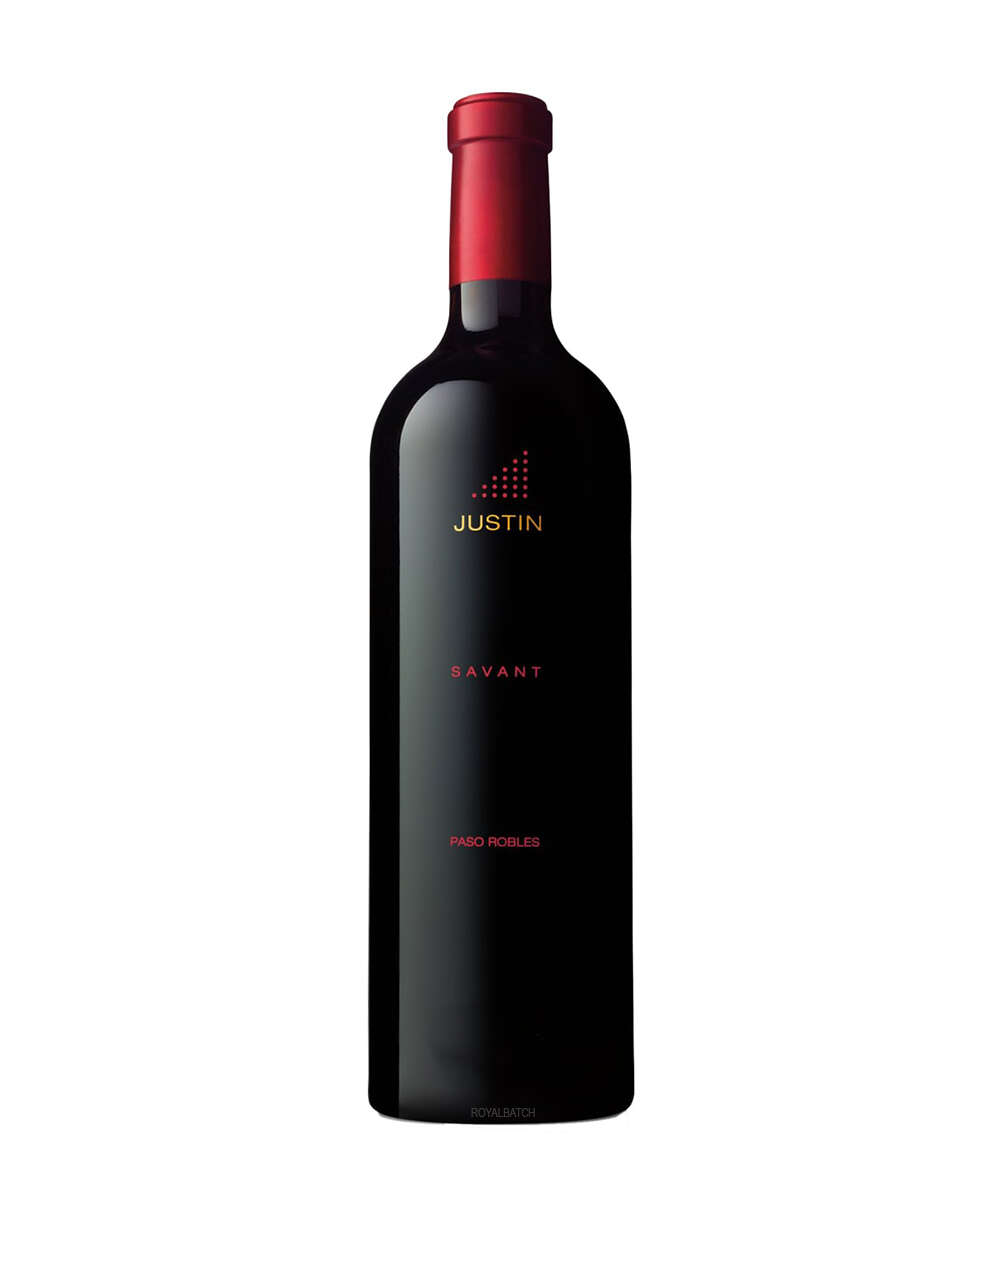 Justin Savant Paso Robles Red Wine 2020